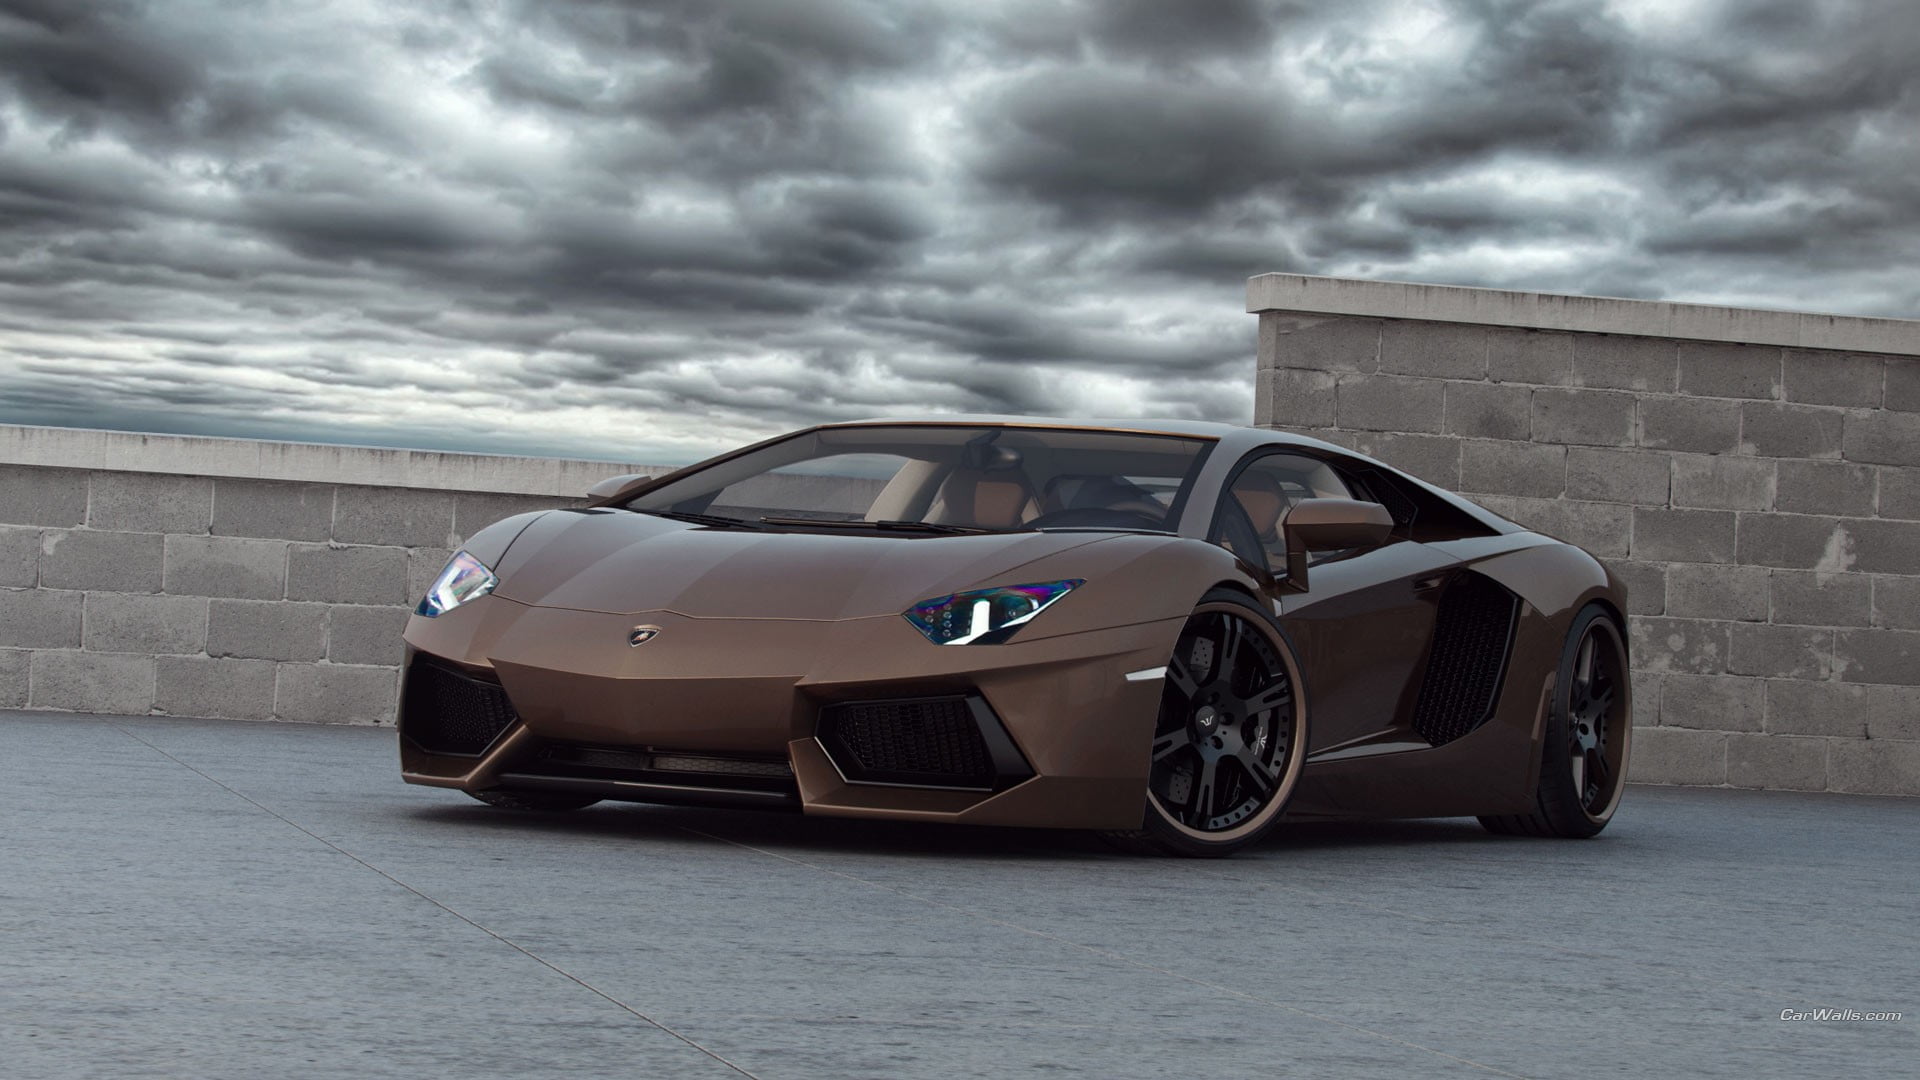 black luxury car, Lamborghini Aventador, vehicle, cloud - sky